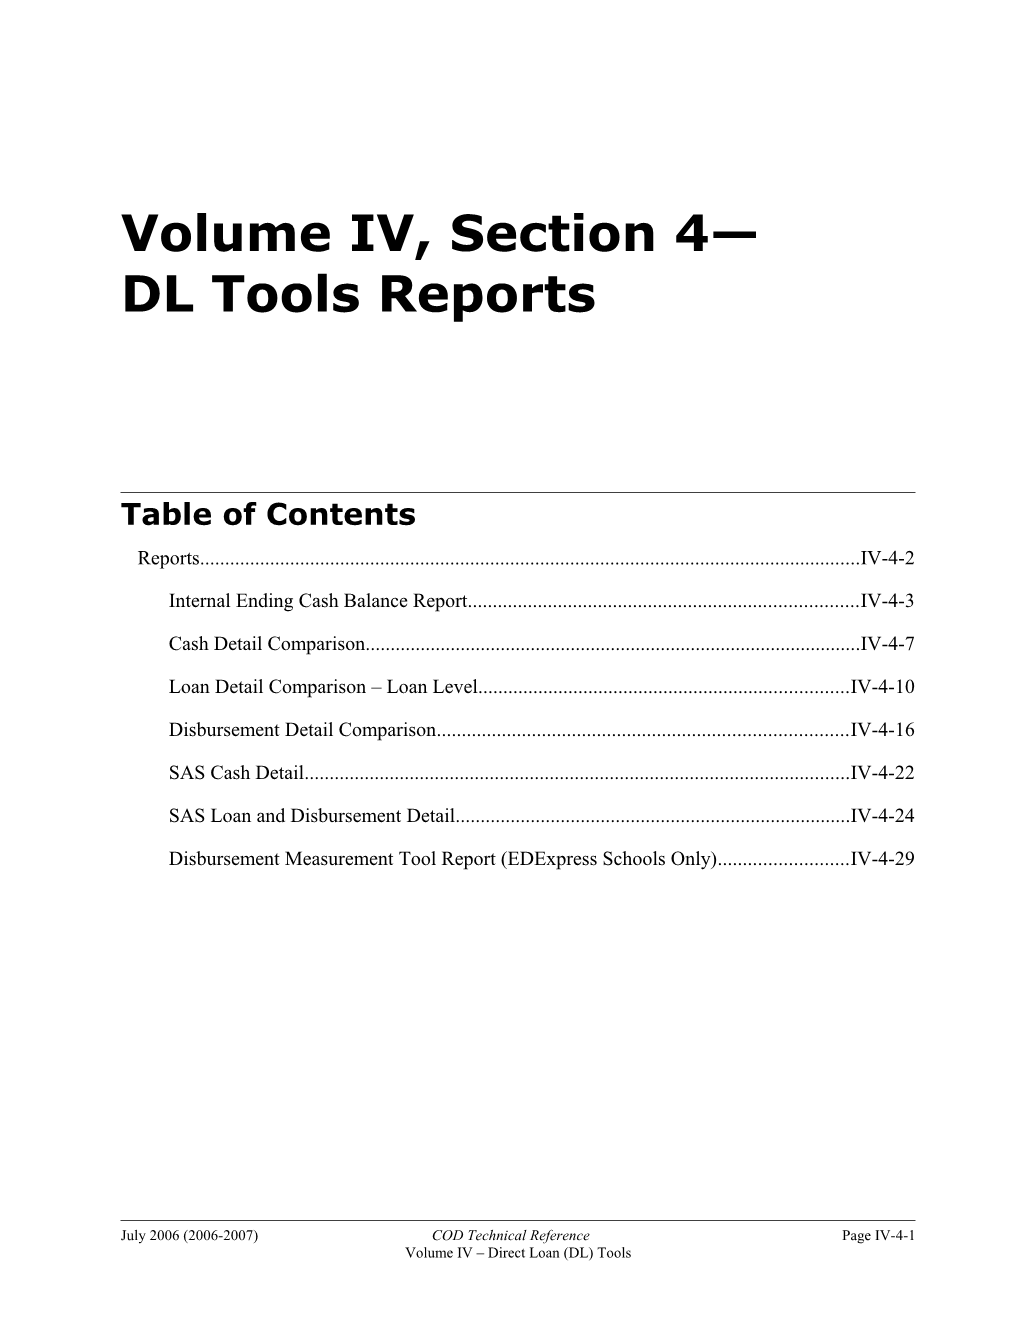 Volume VI, Section 4